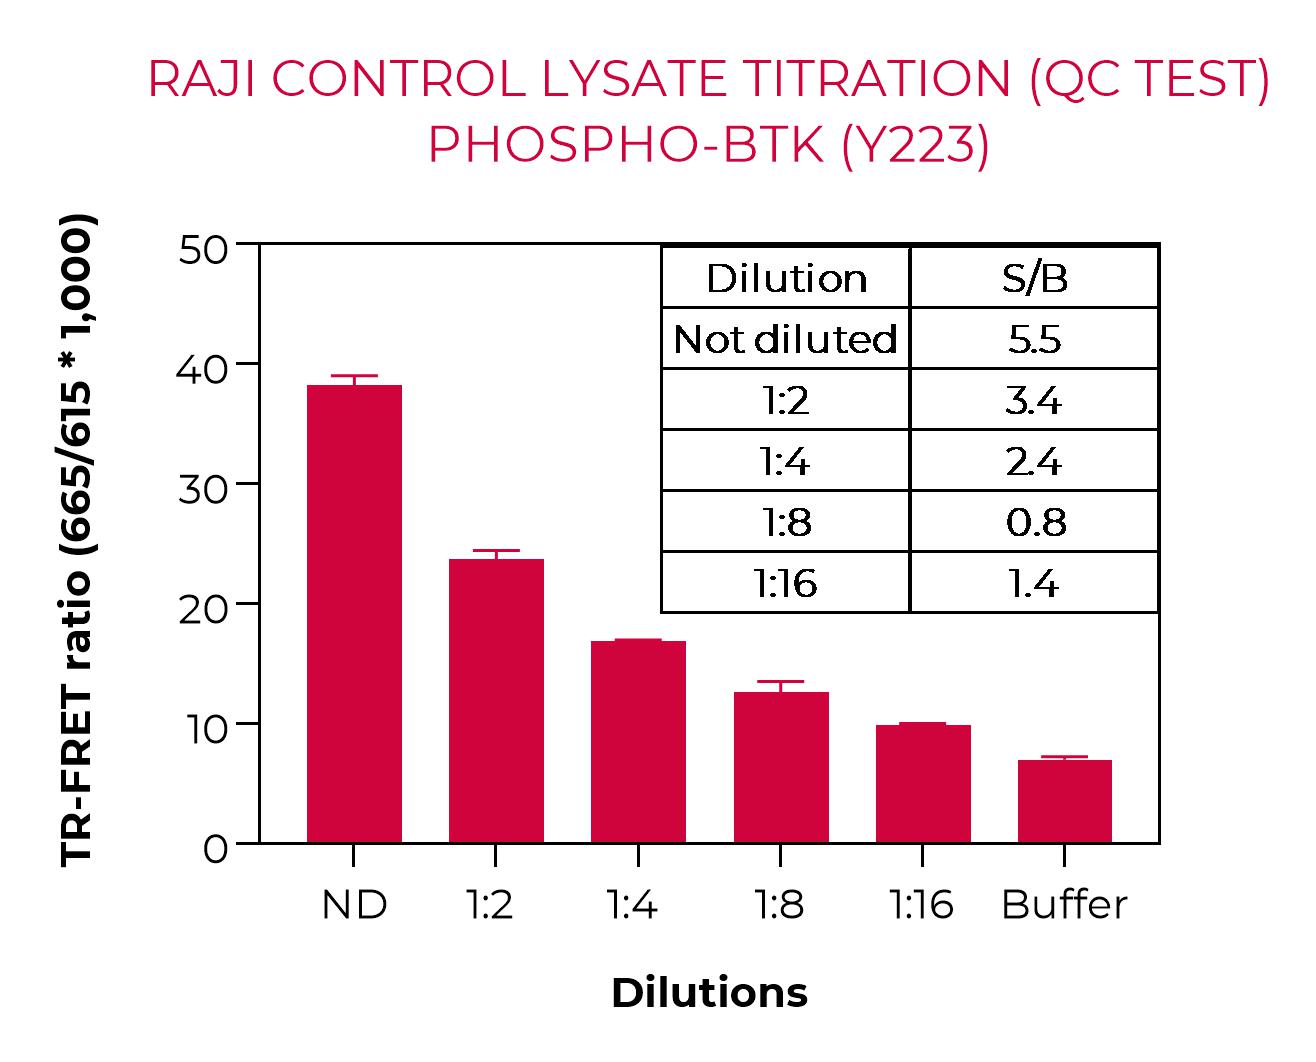 Phospho-BTK (Y223) Control lysate titration